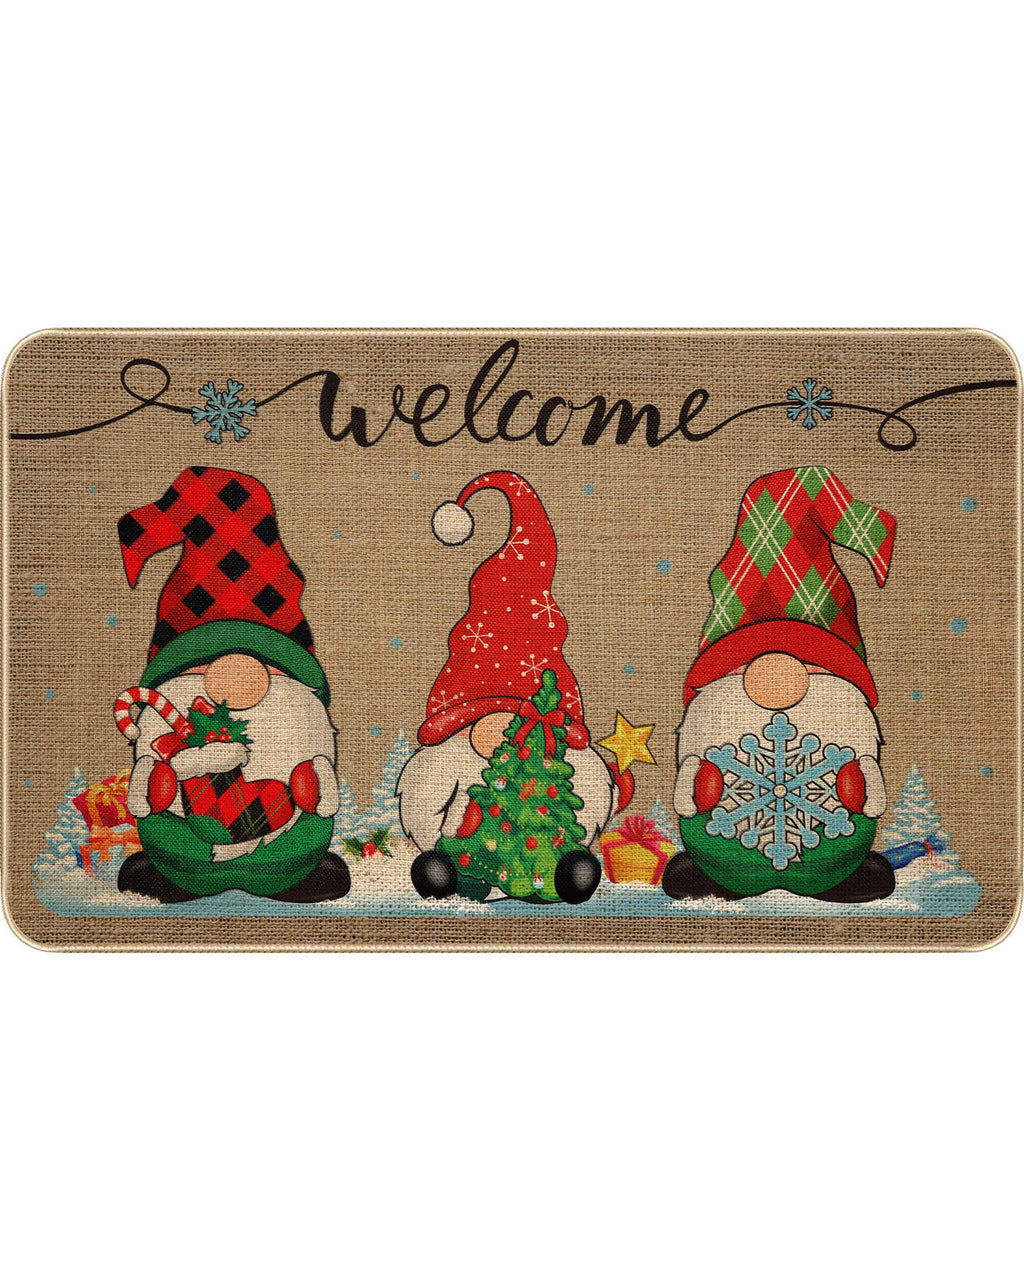  [AUSTRALIA] - Christmas Decorative Doormat Xmas Welcome Christmas Gnome Tomte Mat Non Slip and Washable Winter Doormat Rubber Back Santa Snowflakes Door Mat for Indoor Outdoor, 28 x 17 Inch